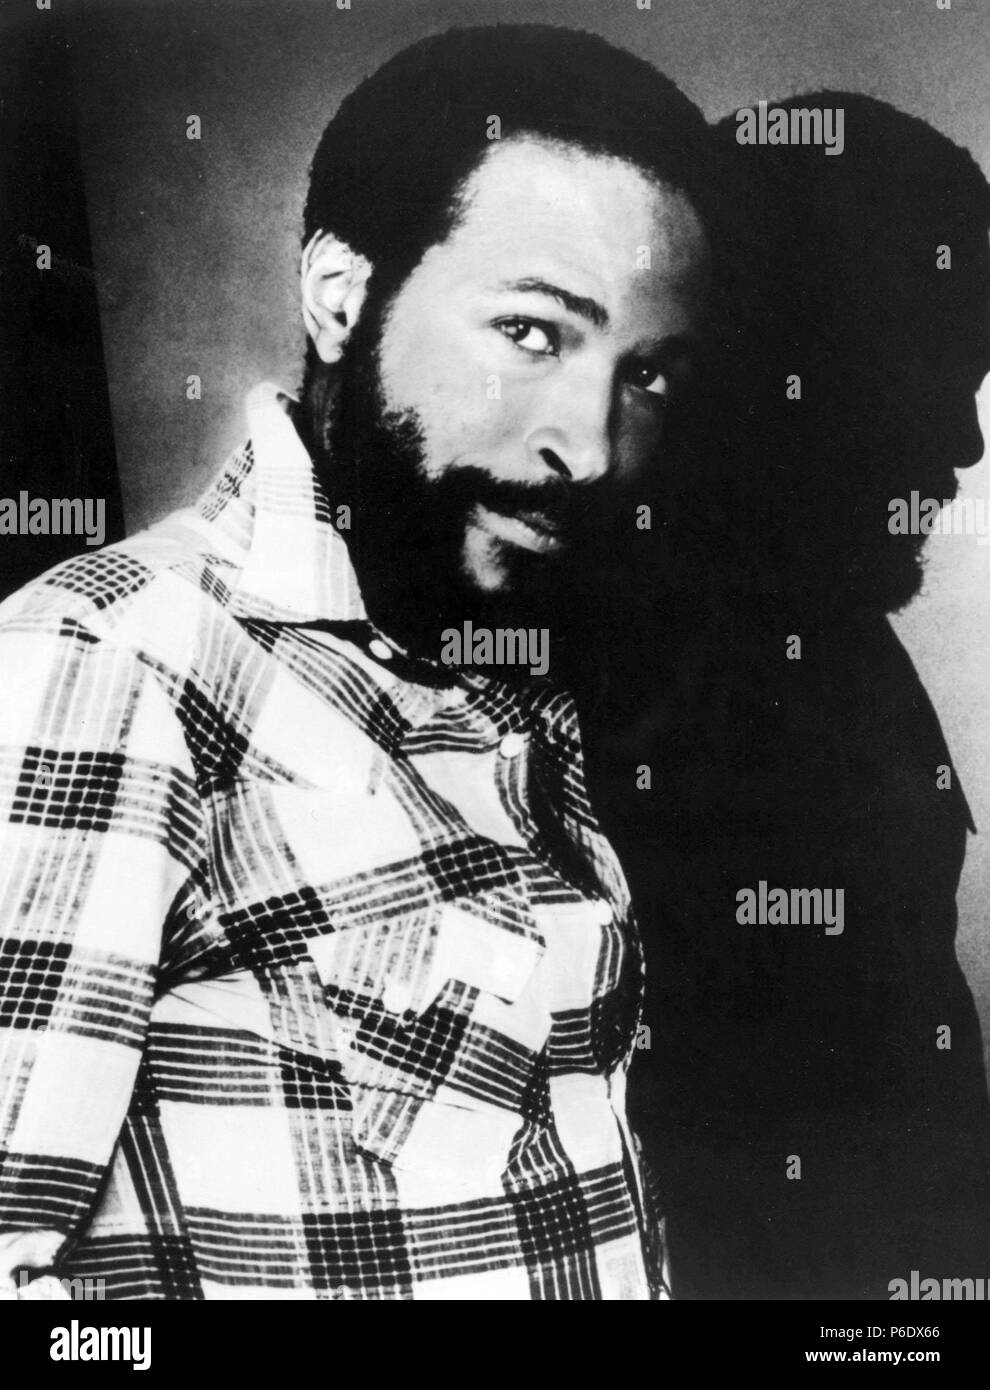 New York, U.S. - File Date Unknown c. 1970's - MARVIN GAYE soul singer. (Credit Image: © Globe Photos/ZUMAPRESS.com) Credit: Globe Photos/ZUMAPRESS.com/Alamy Live News Stock Photo